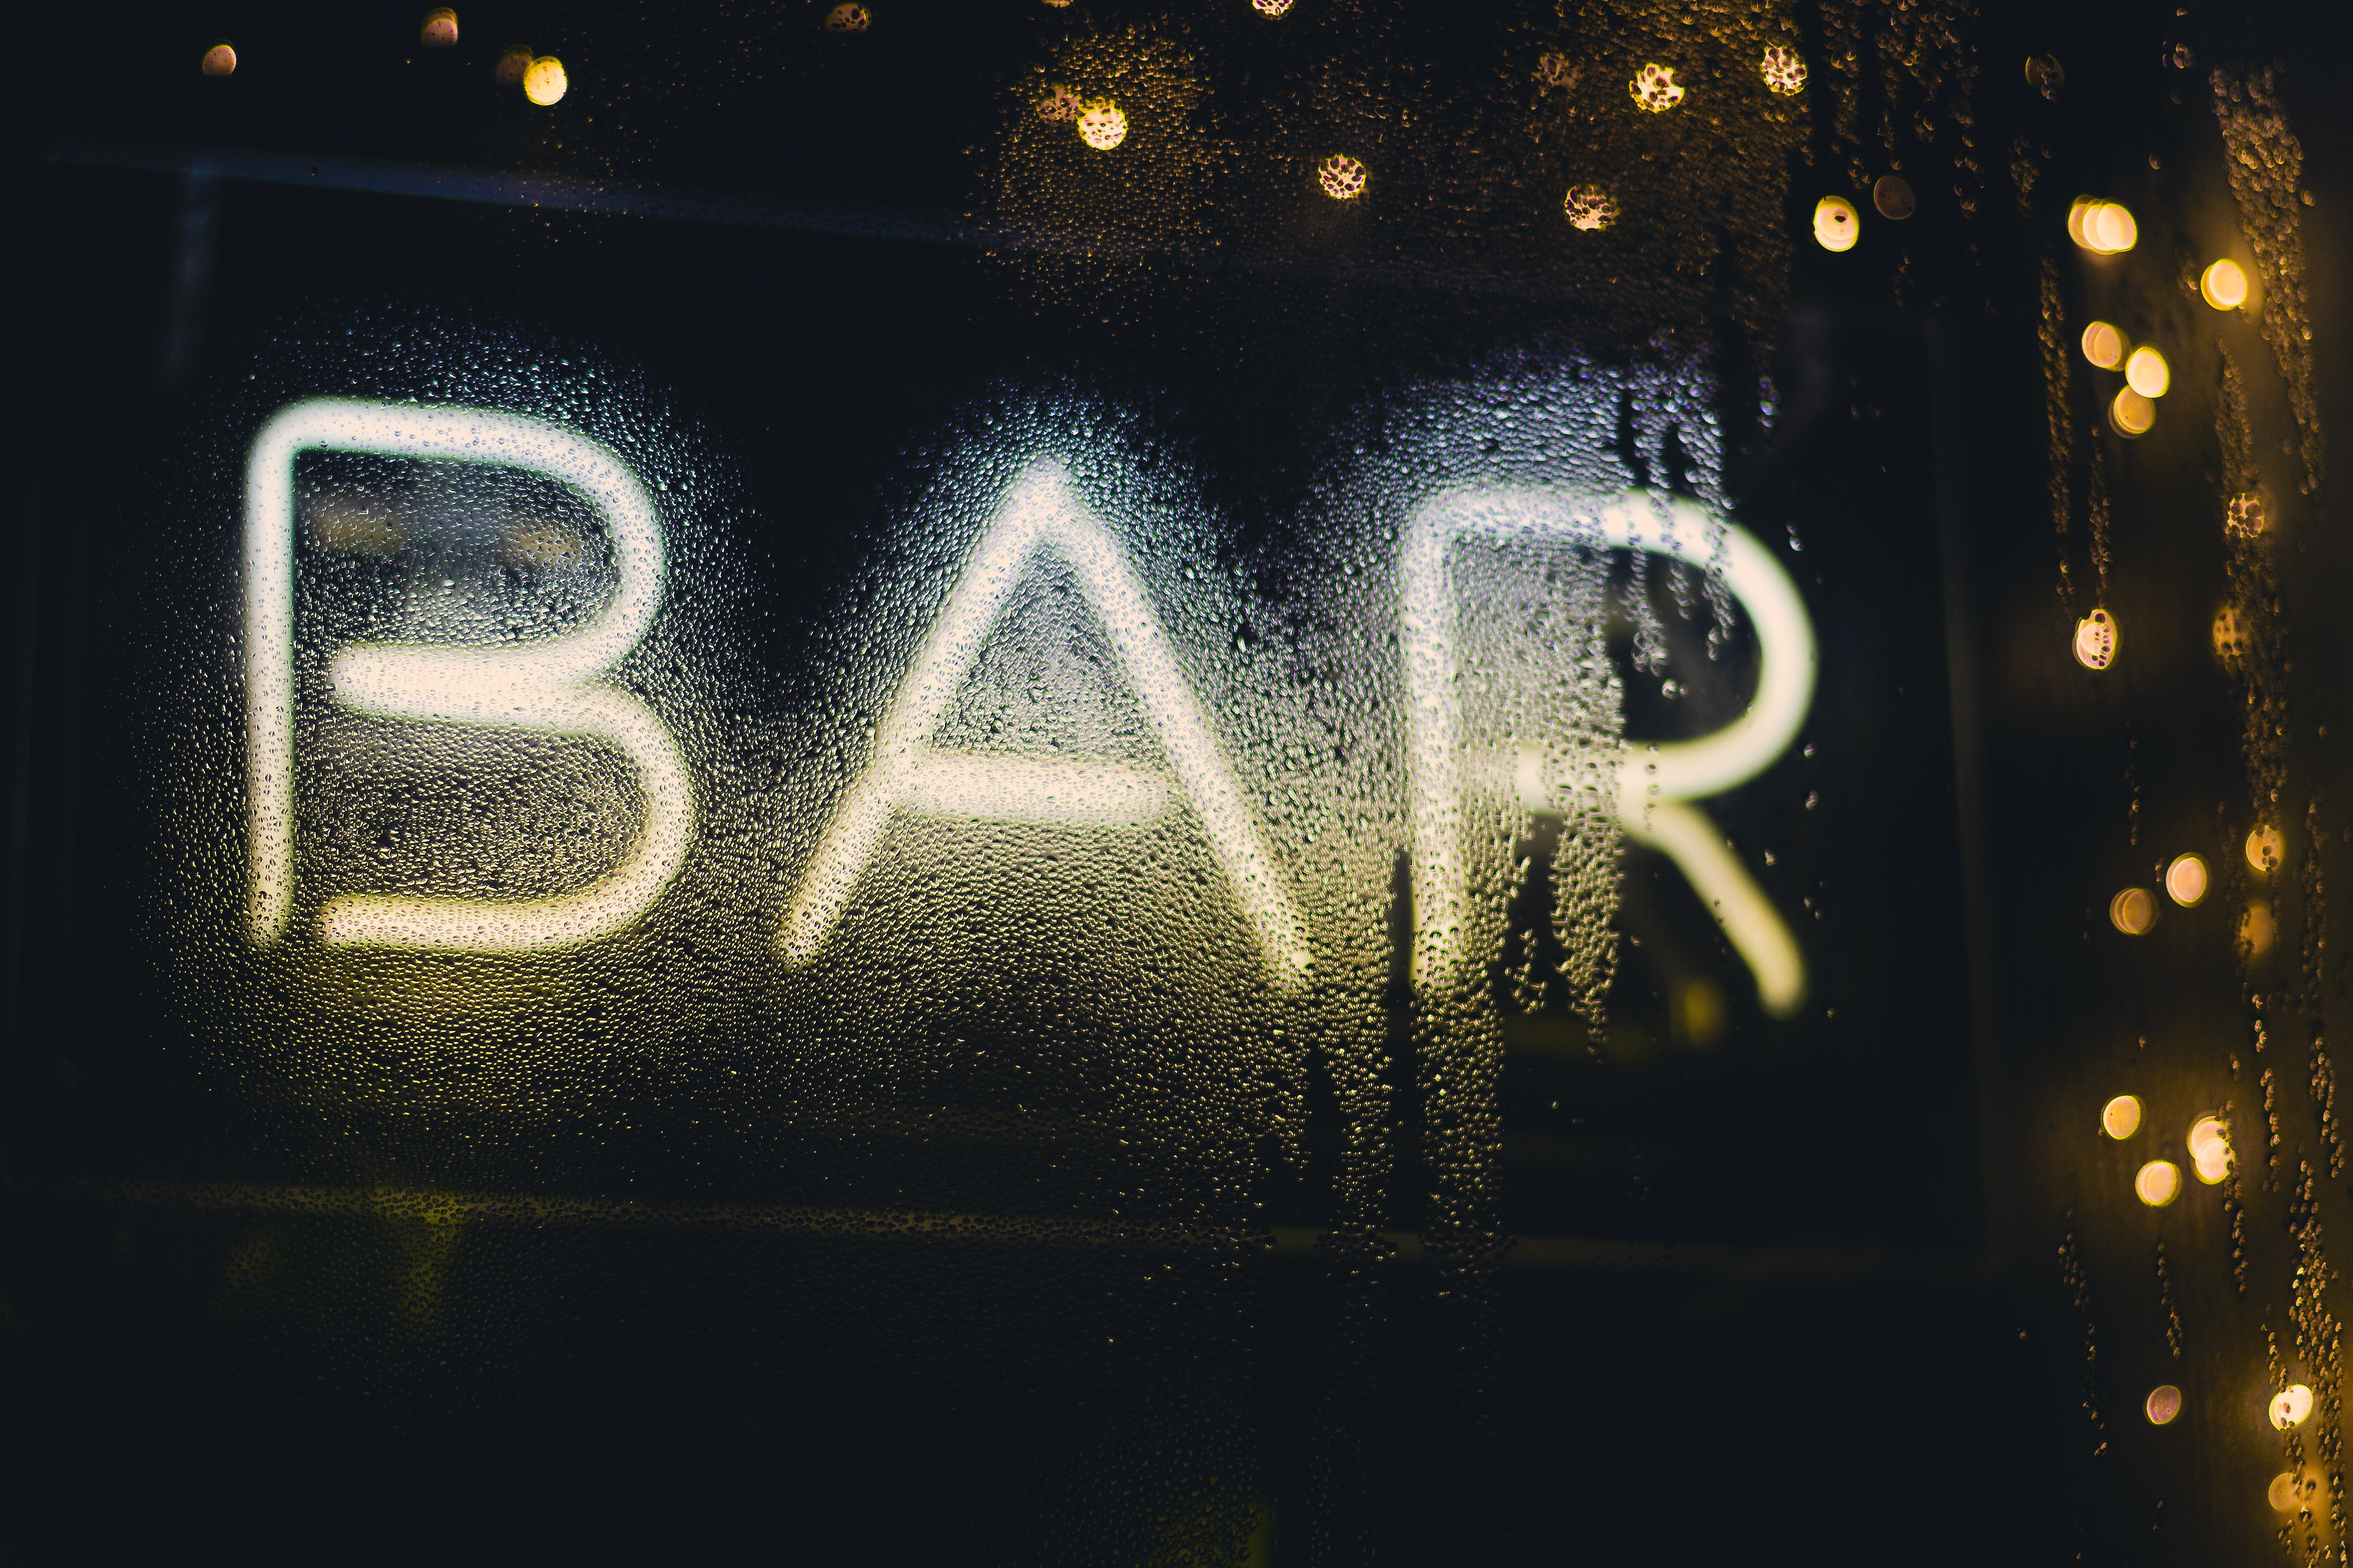 bar neon light signage photo